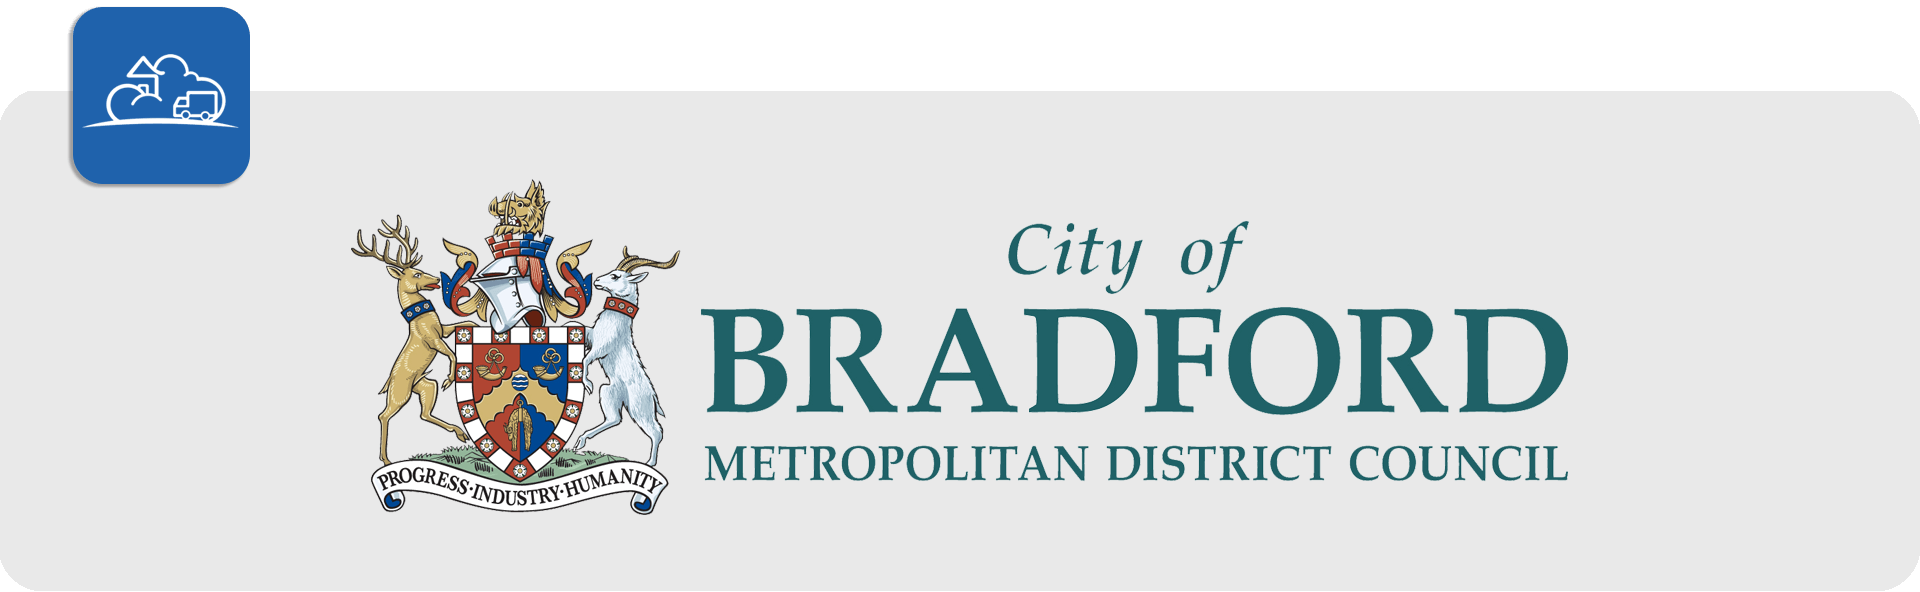 city of bradford metropolitan district council logo